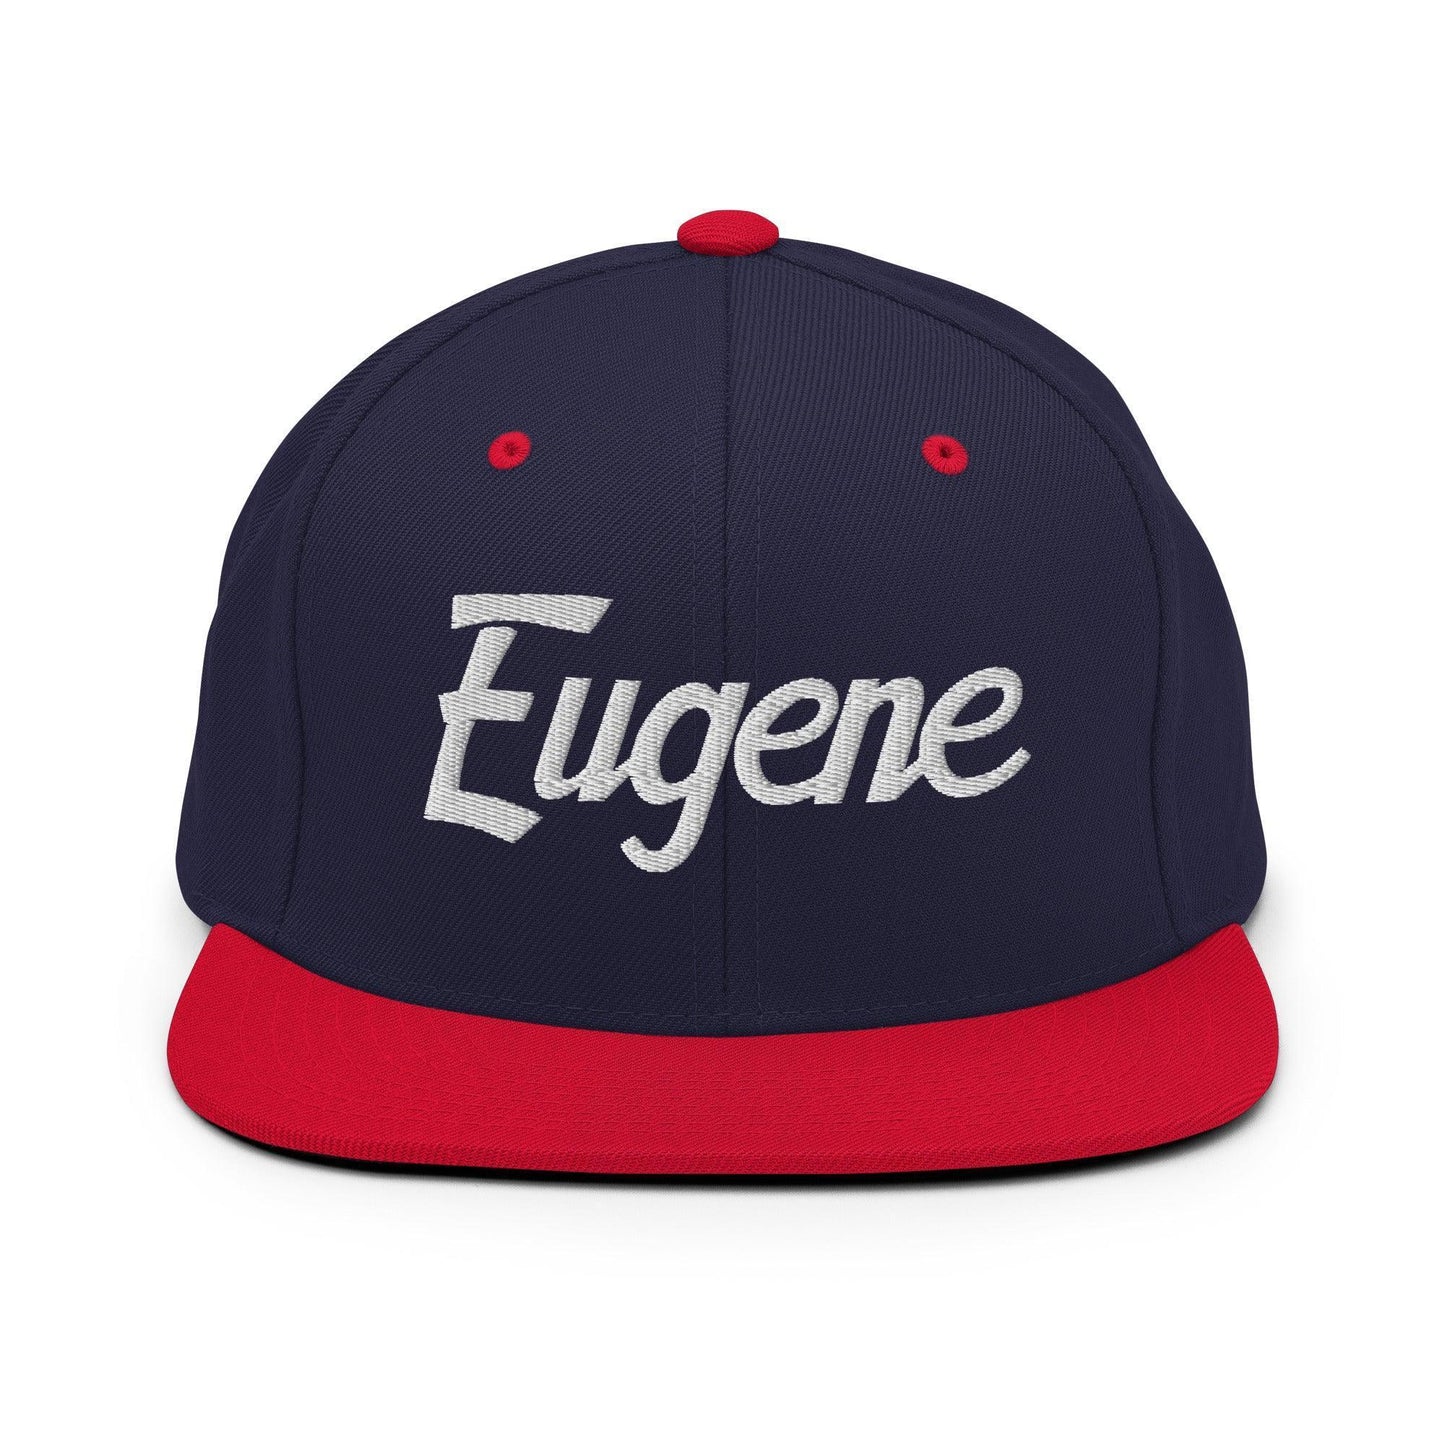 Eugene Script Snapback Hat Navy Red